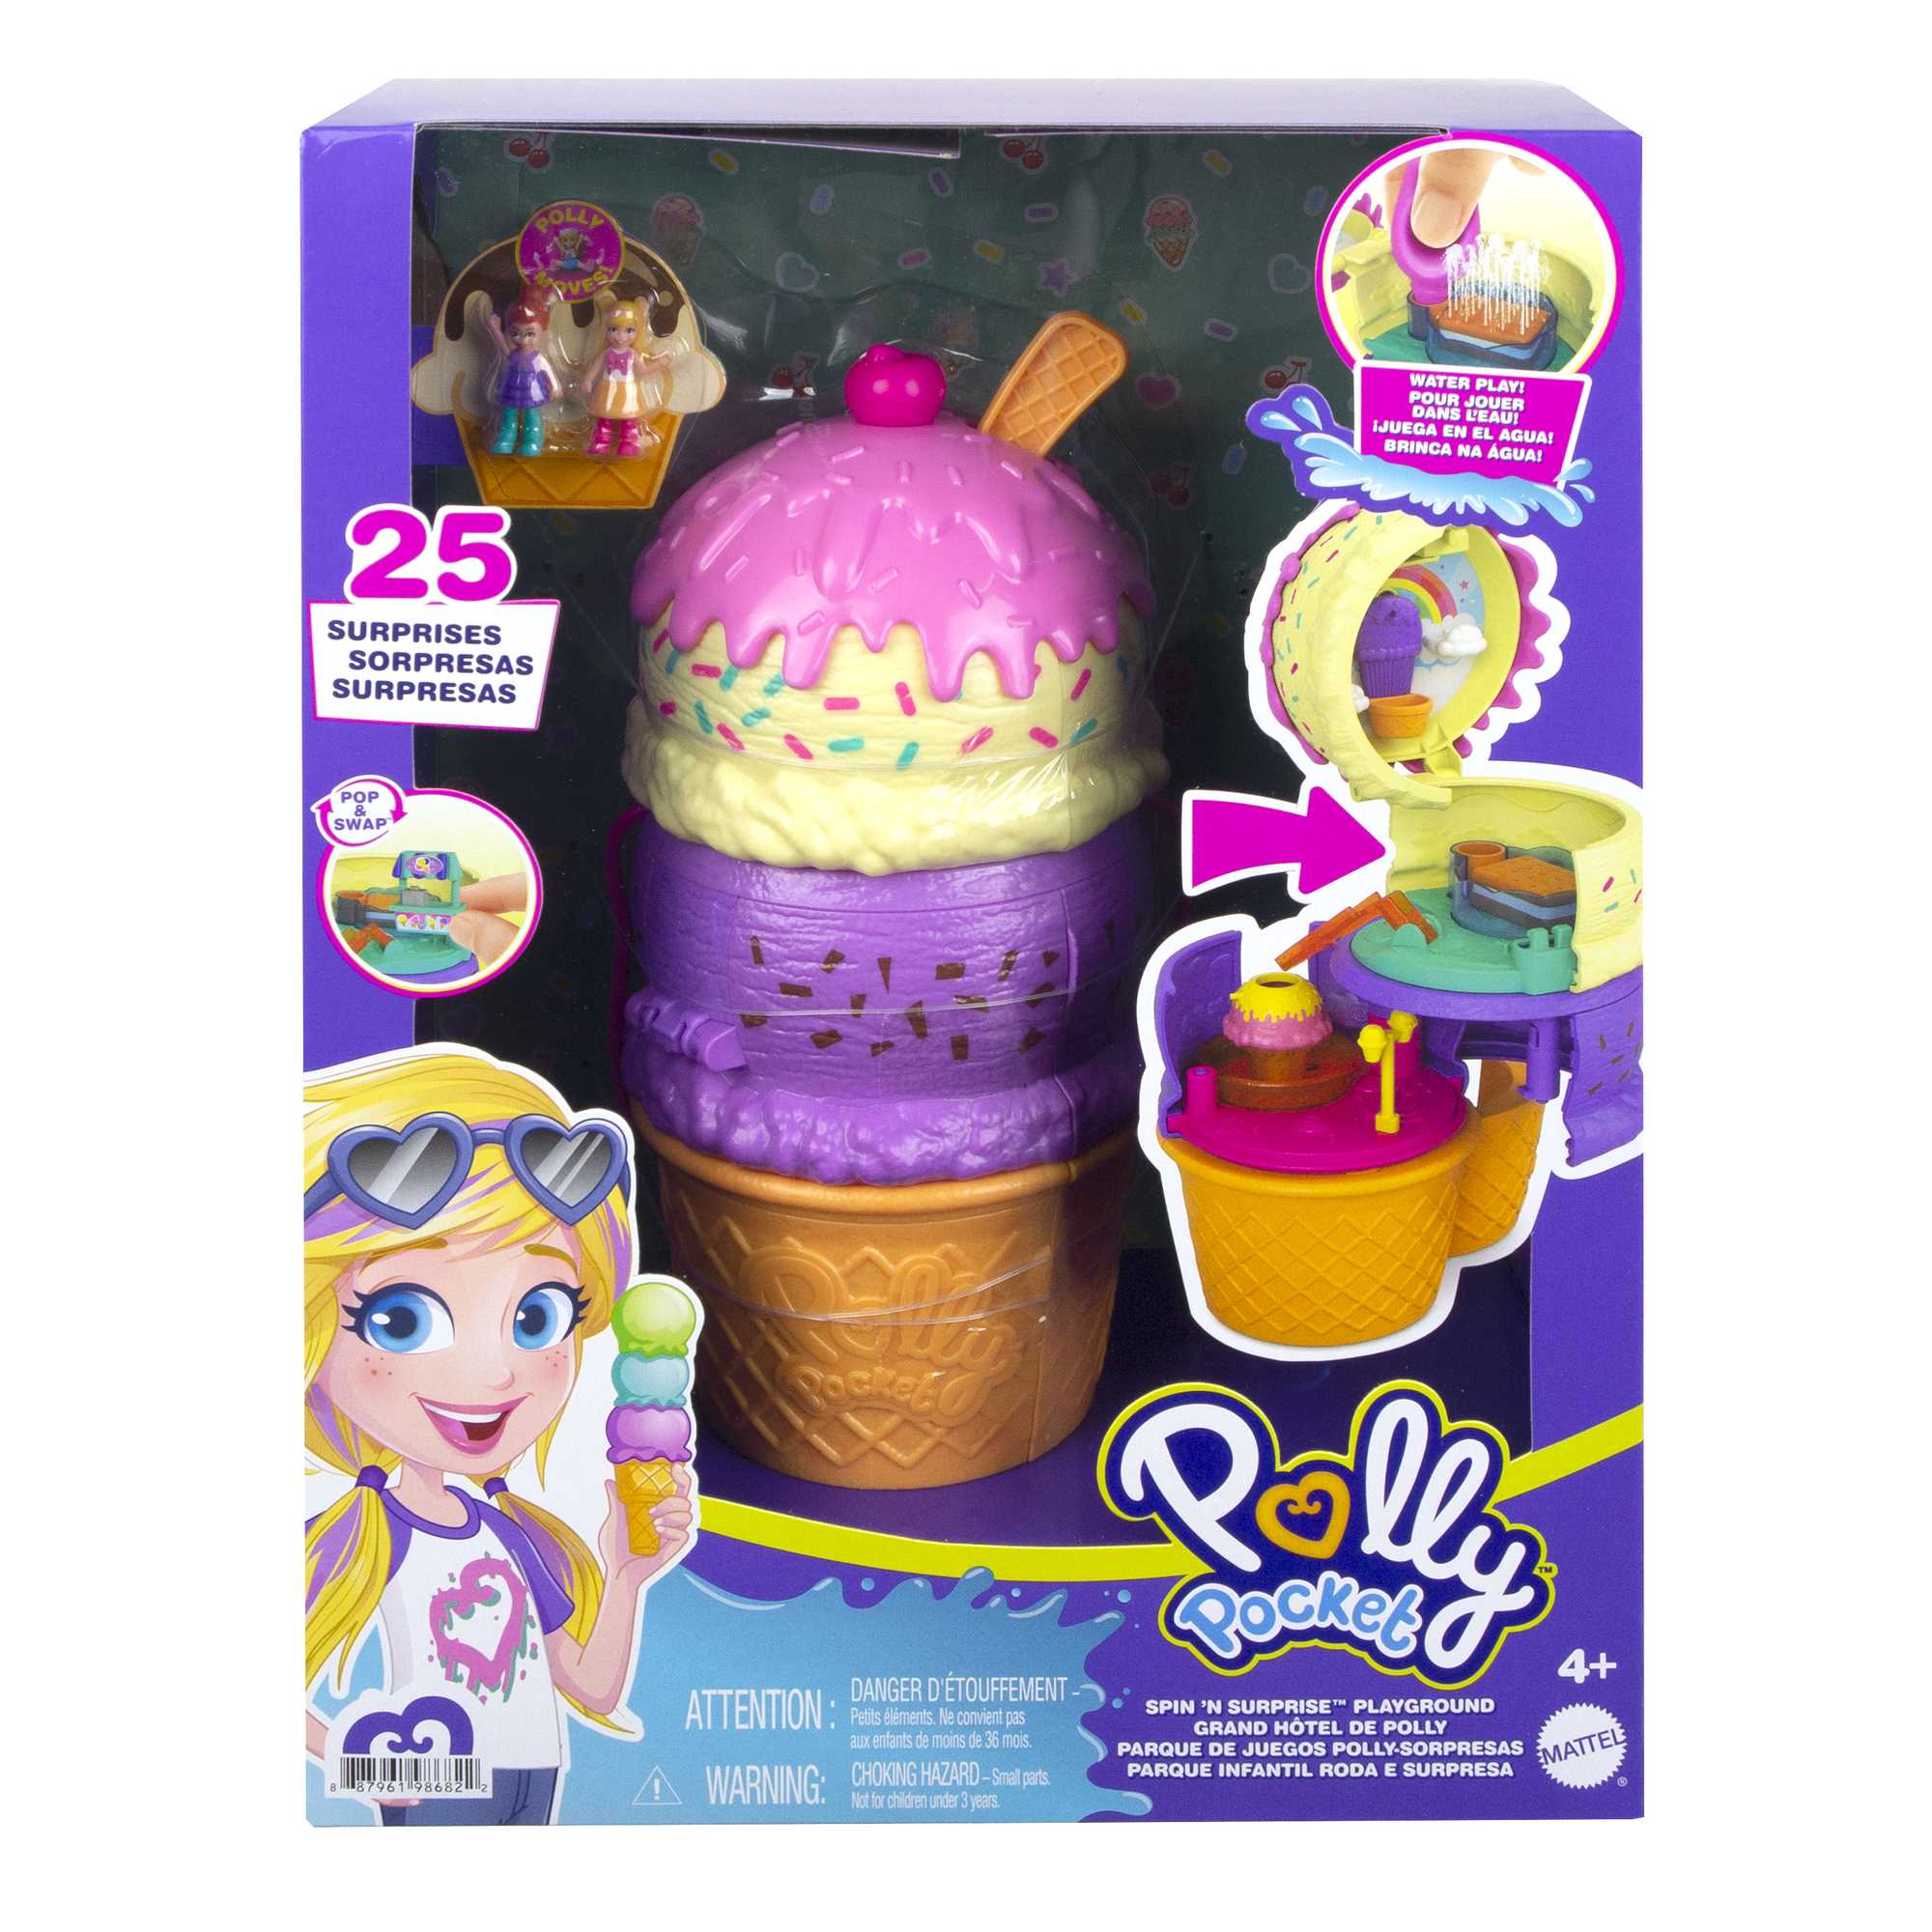 Polly Pocket Conjunto de Brinquedo Padaria de cupcakes : :  Brinquedos e Jogos